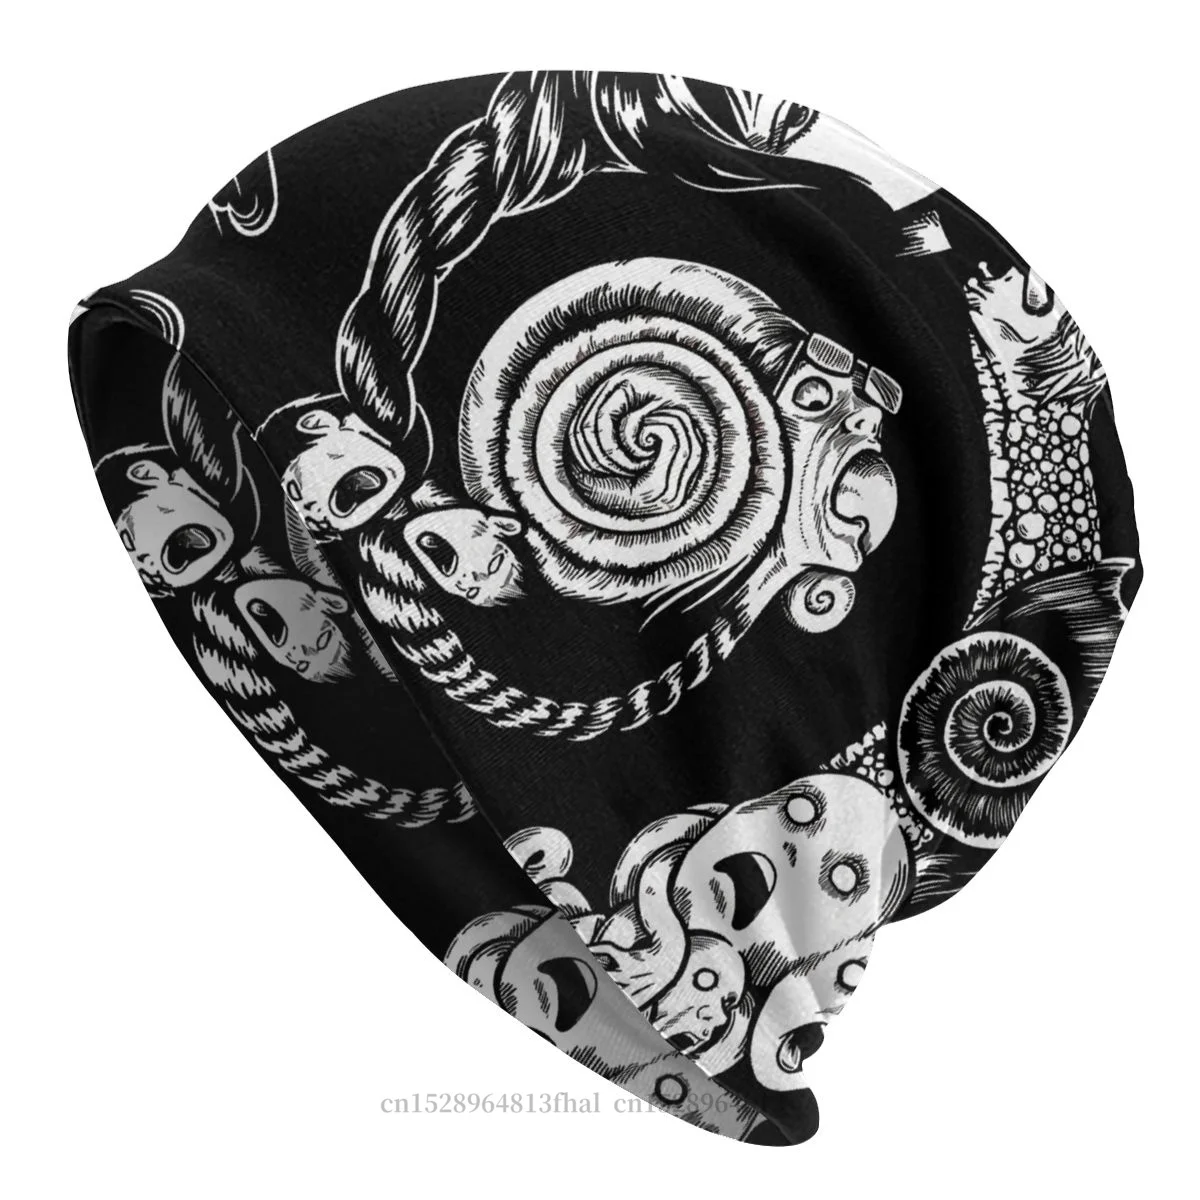 

Spiral Into Horror Uzumaki Bonnet Homme Skullies Beanies Hat Abstract Acrylic Expressionist Art For Men Women Style Cotton Hats